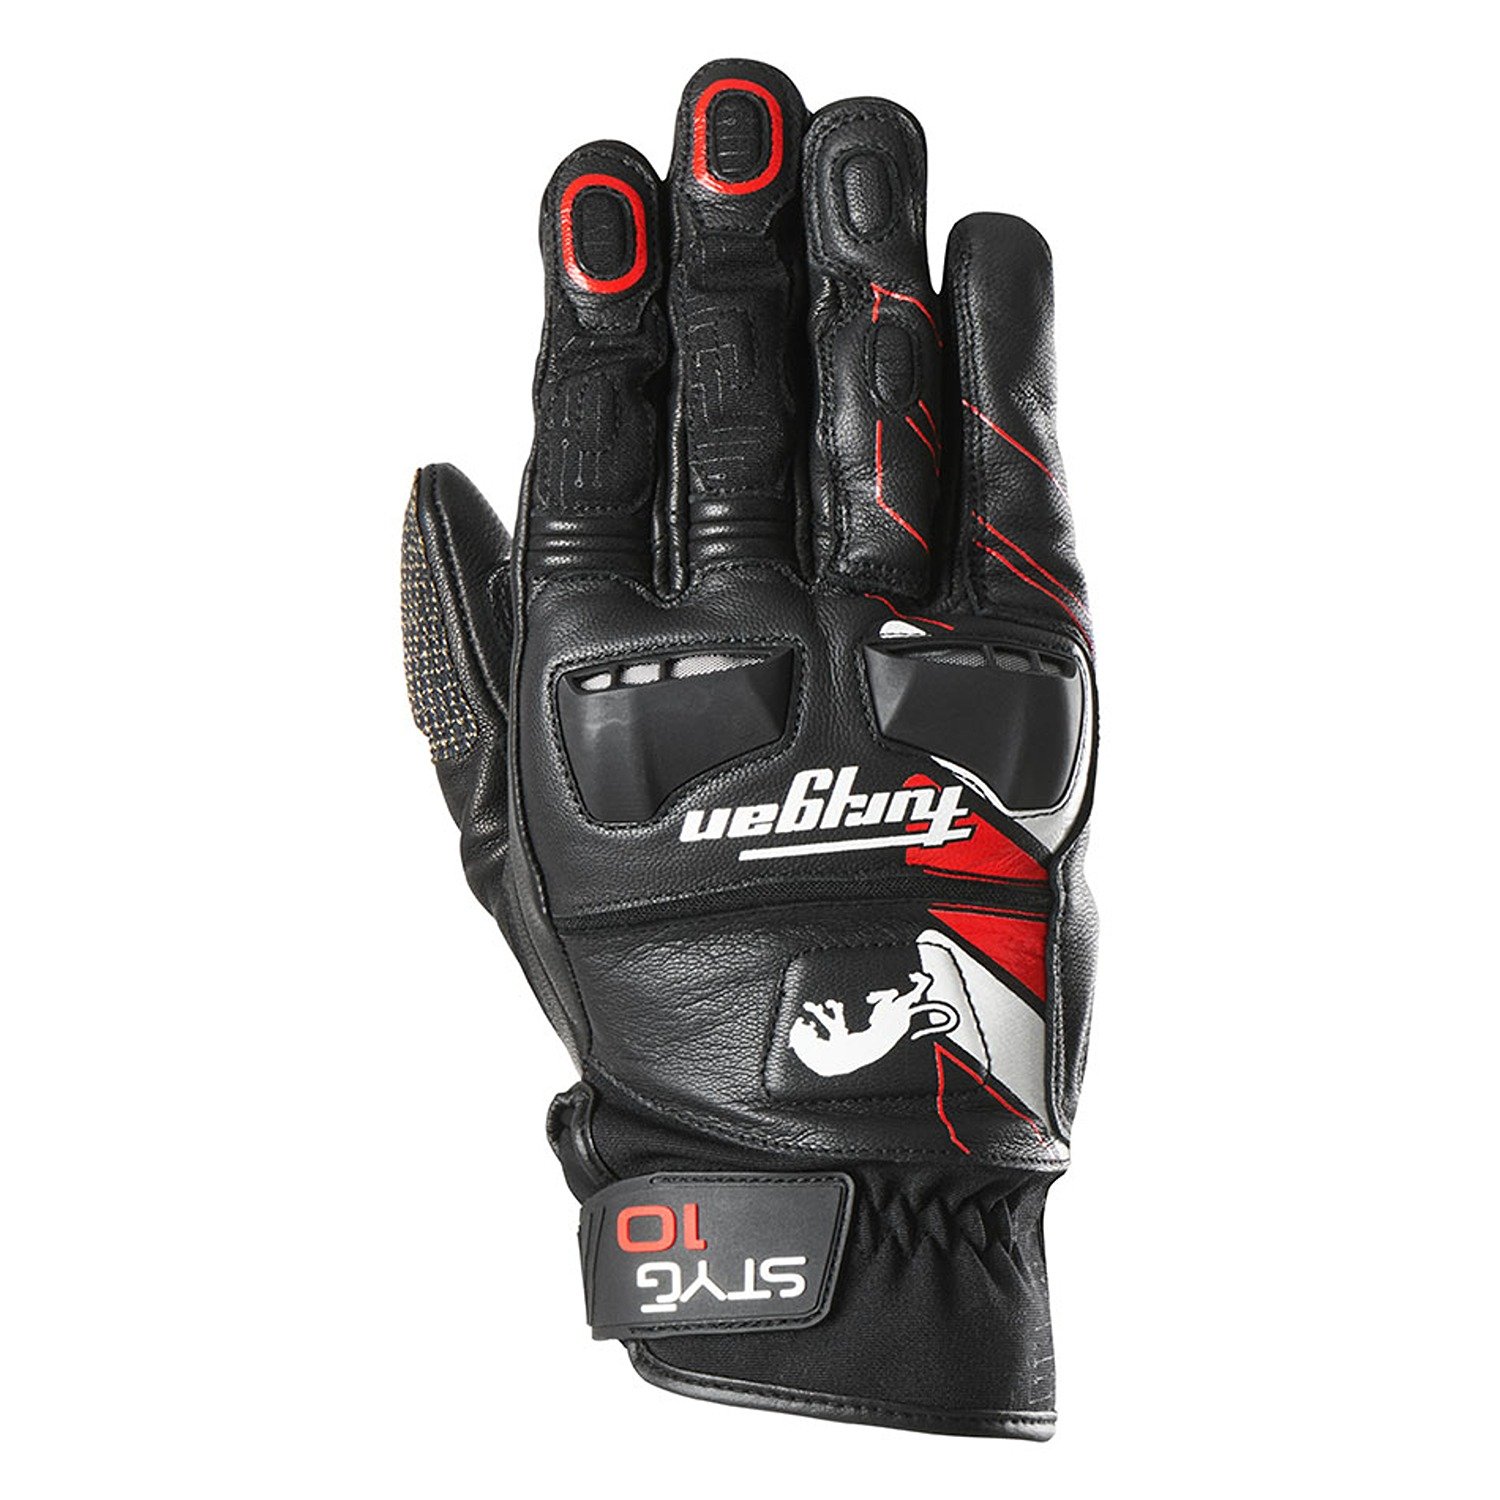 Image of Furygan Styg10 Gloves Black White Red Size 3XL ID 3435980385071